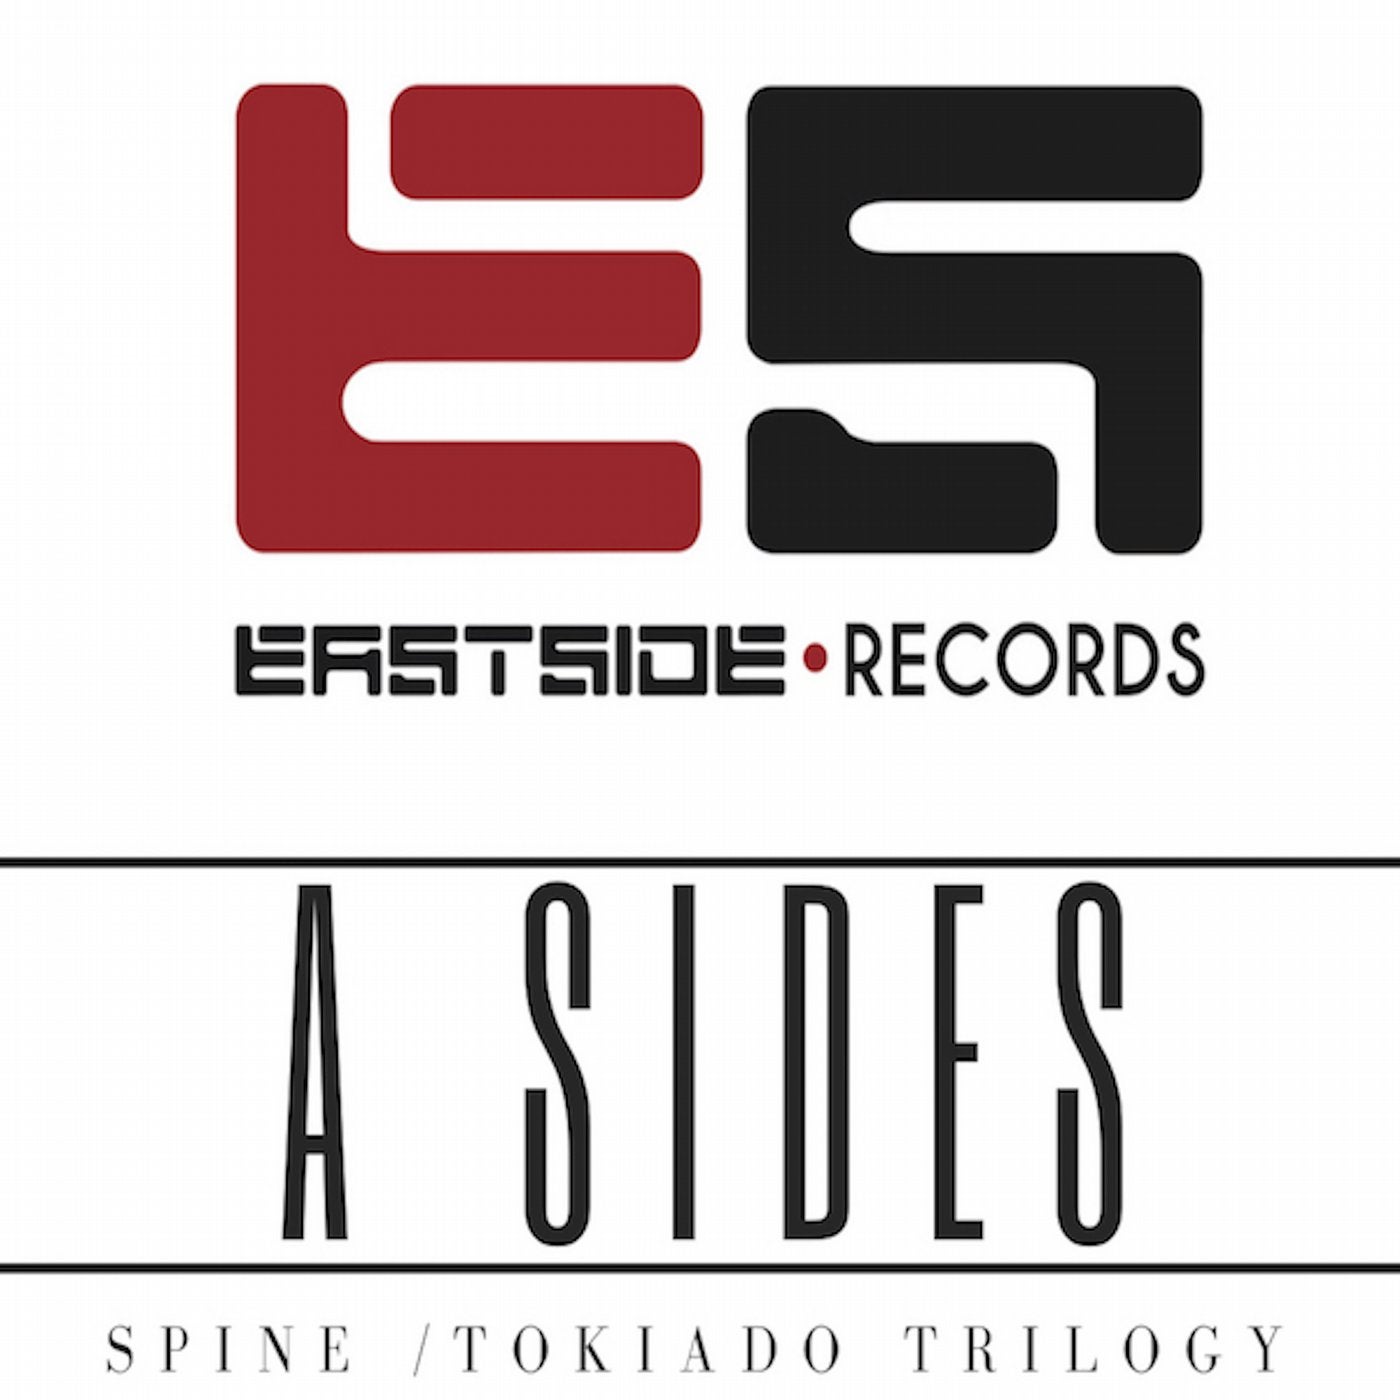 Spine / Tokiado Trilogy